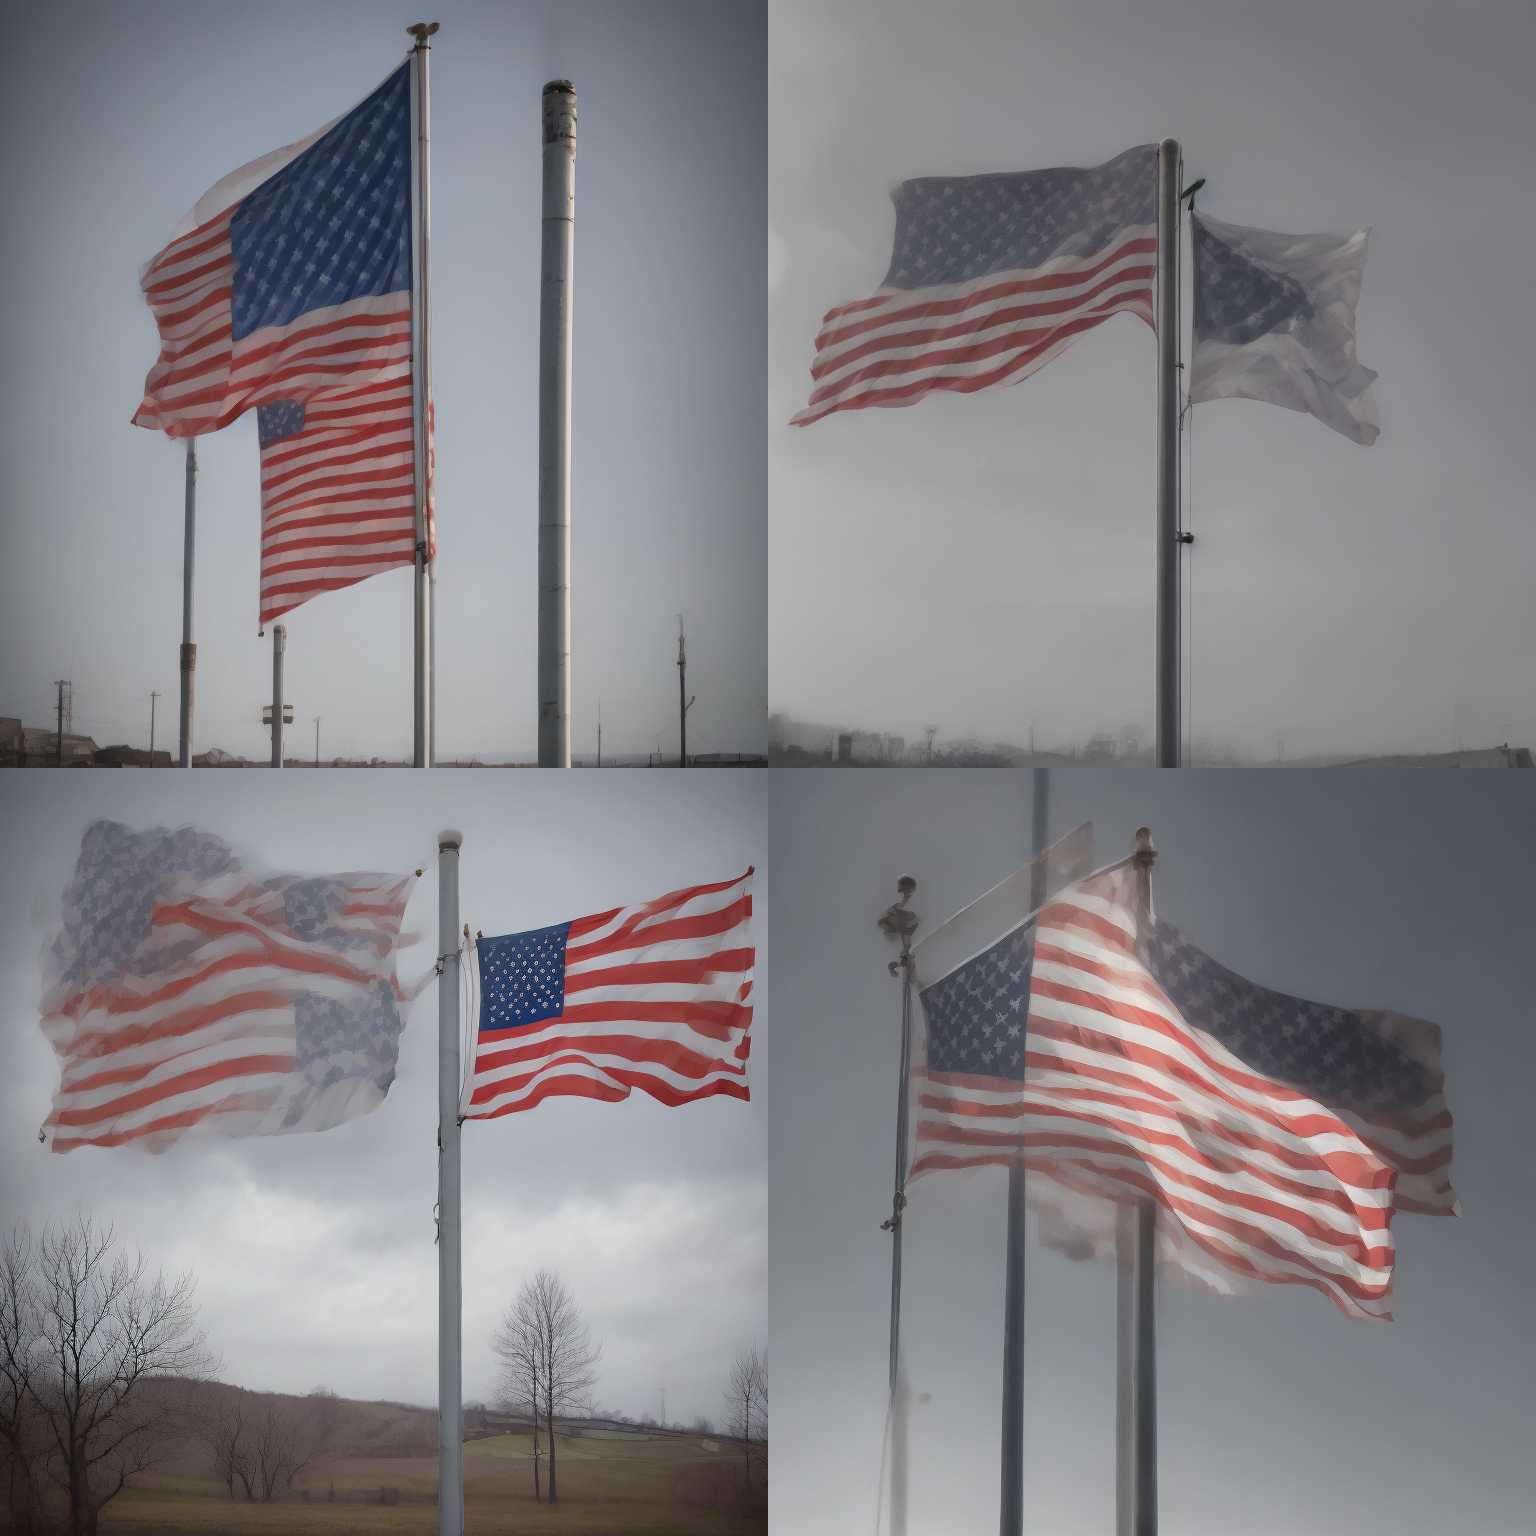 A flag on a pole on a windless day